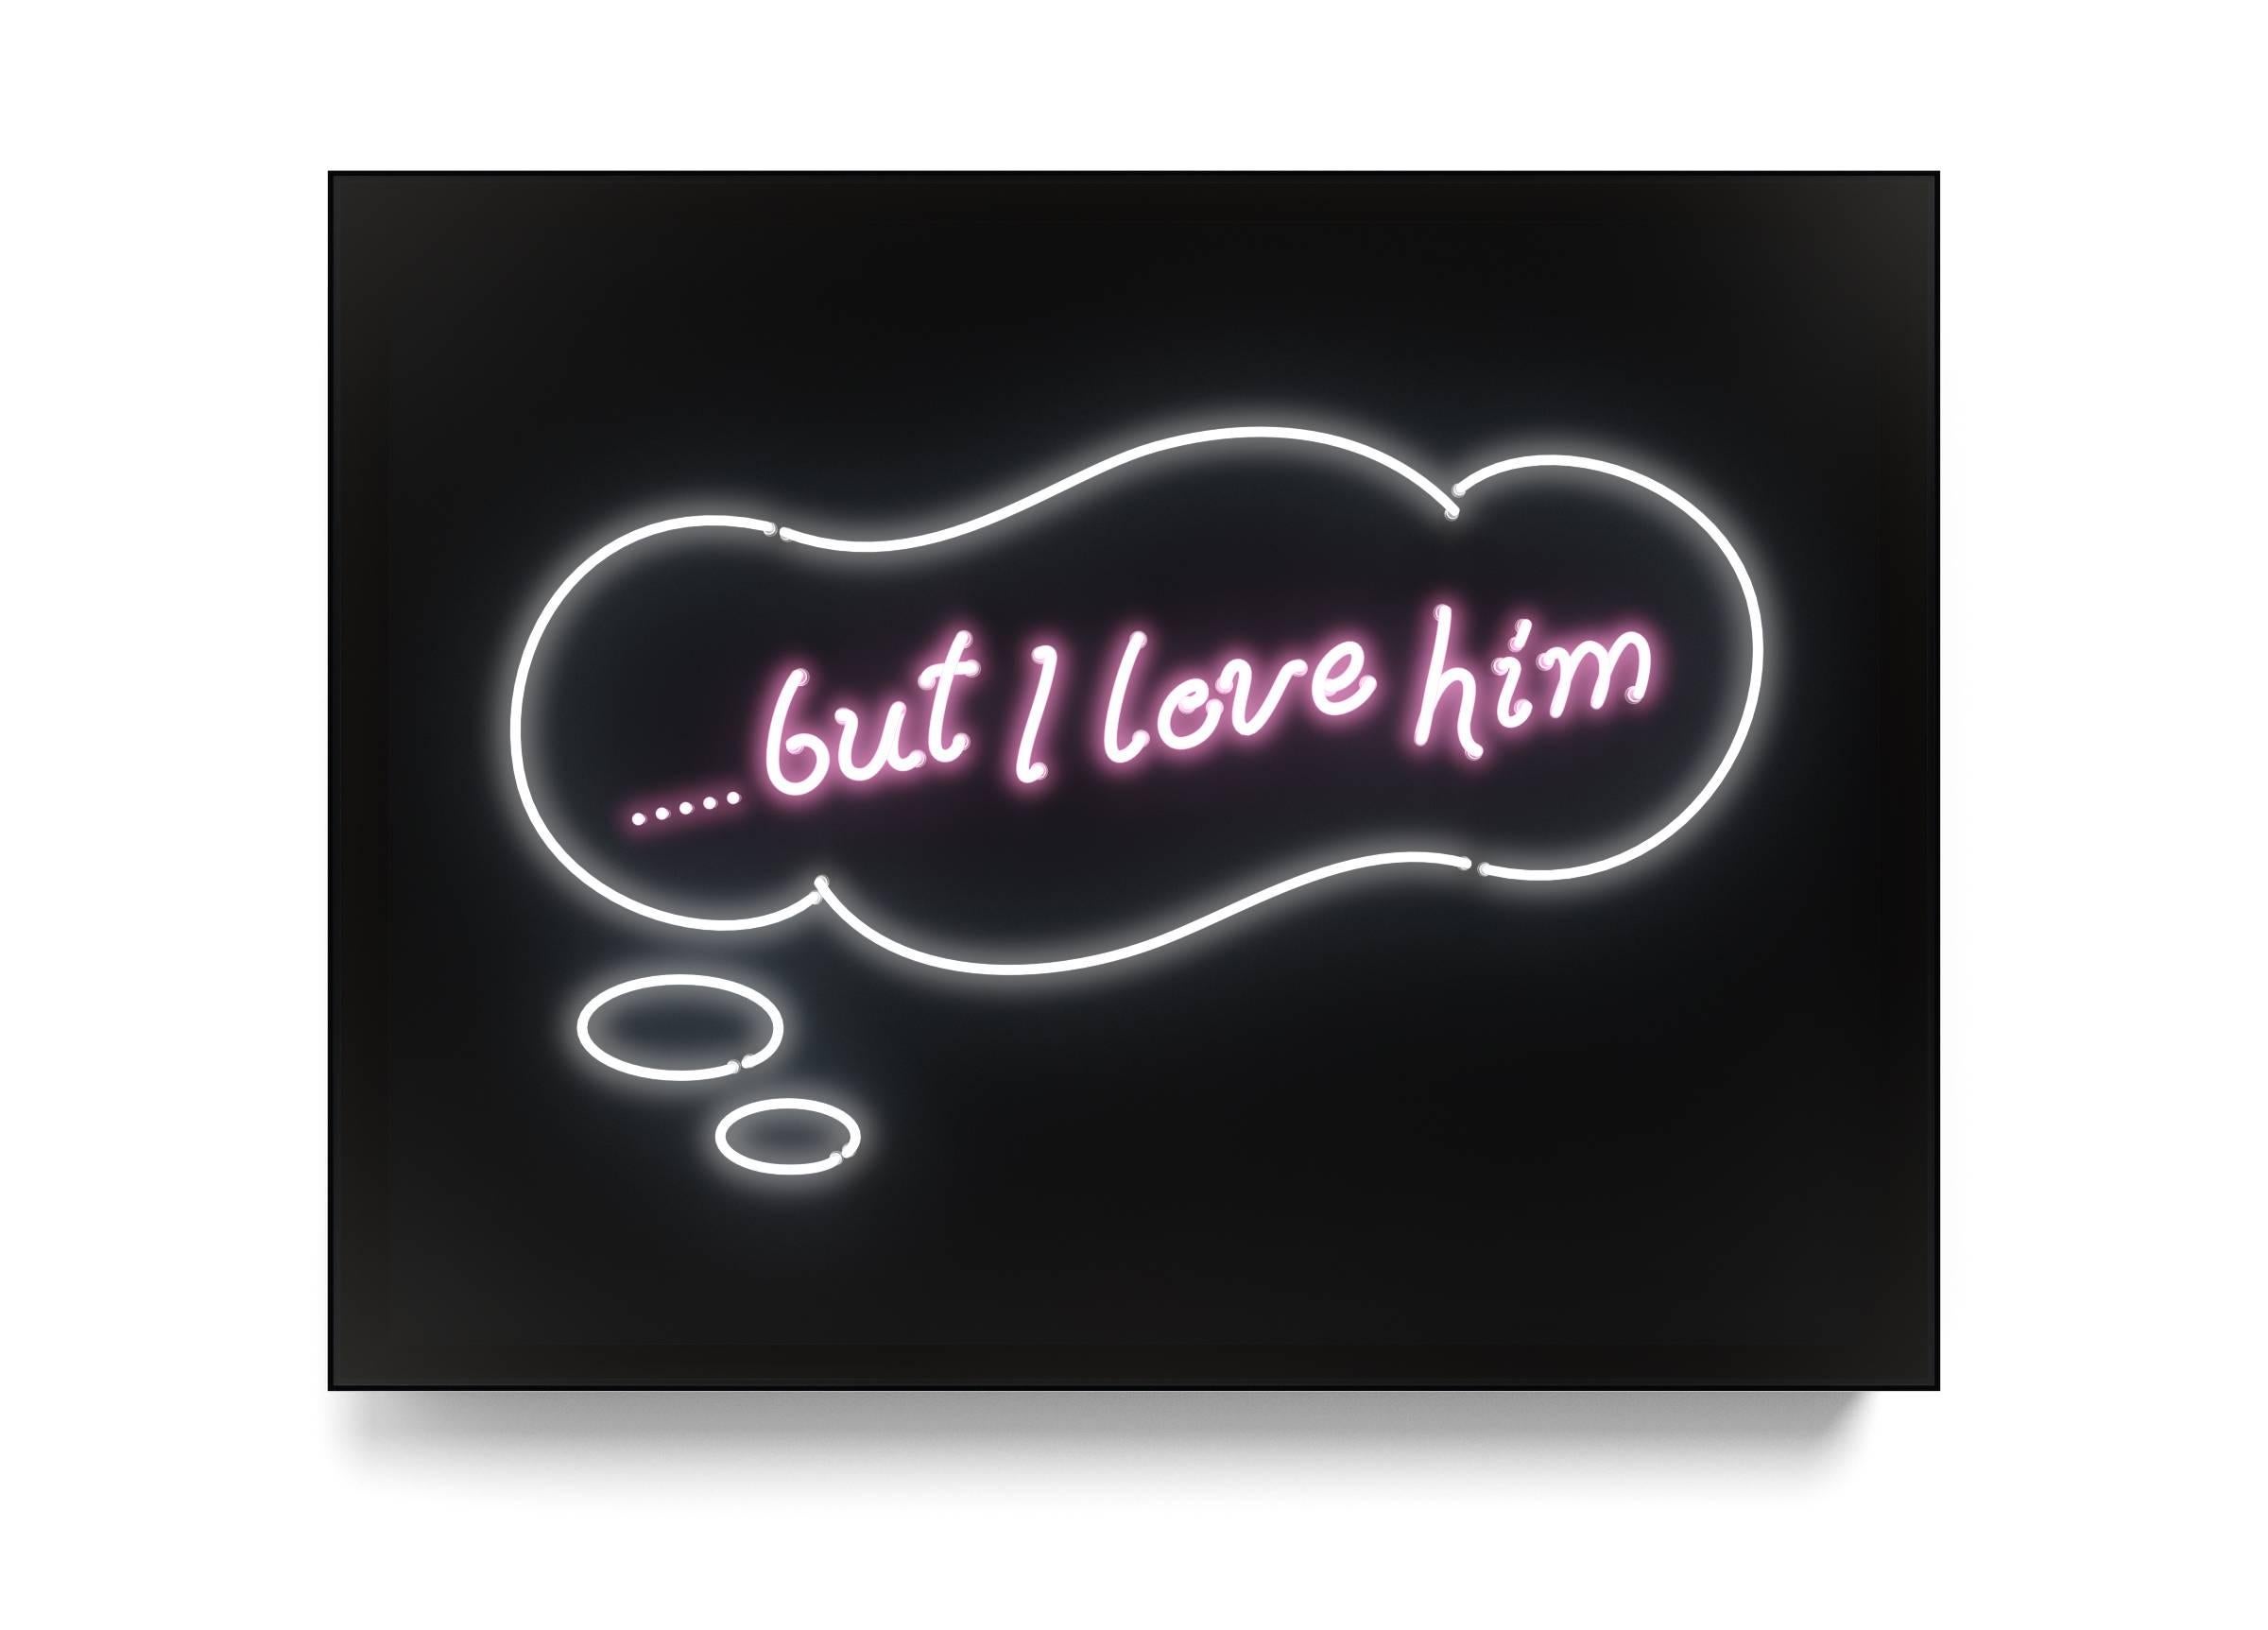 But I love him - Contemporary Art by David Drebin